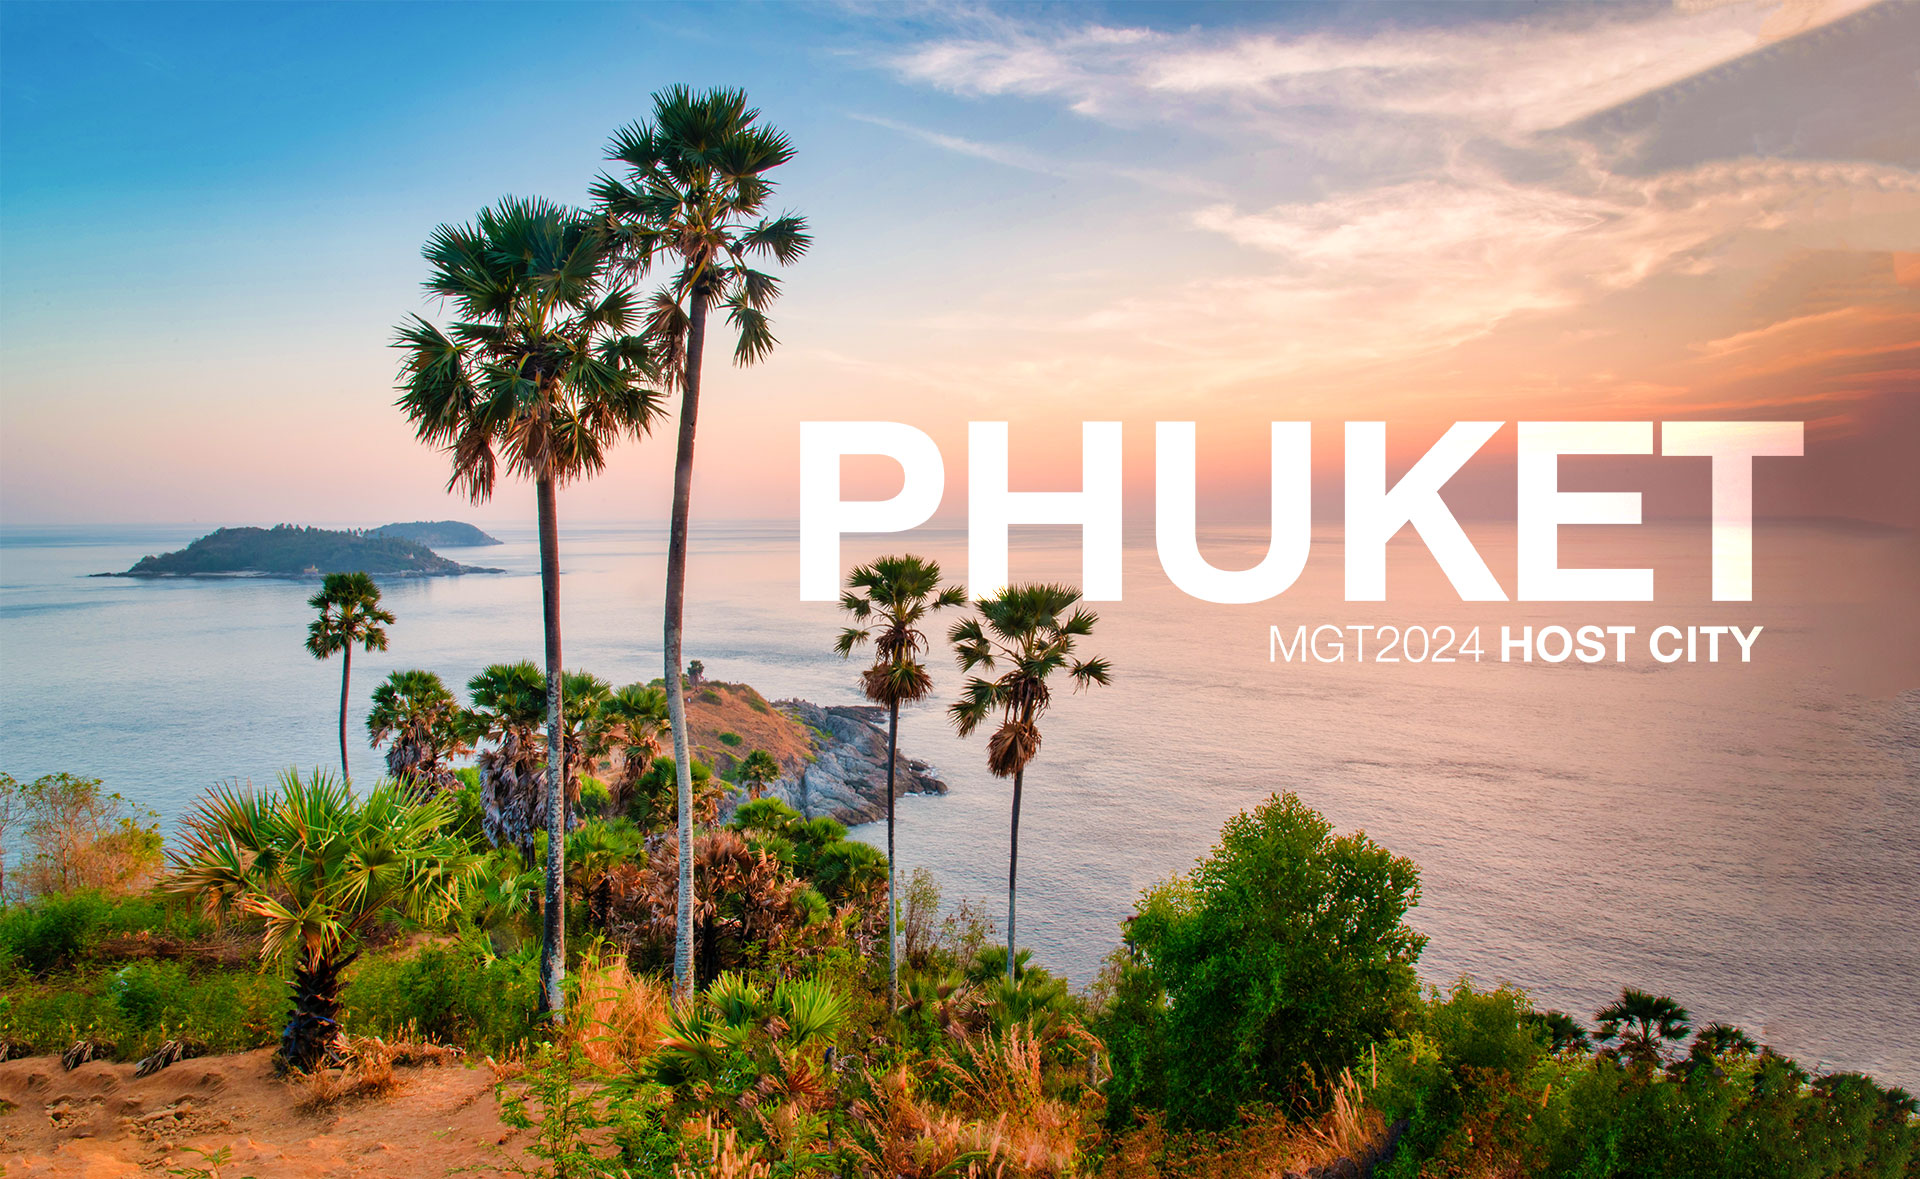 Phuket - MGT2024 Host City